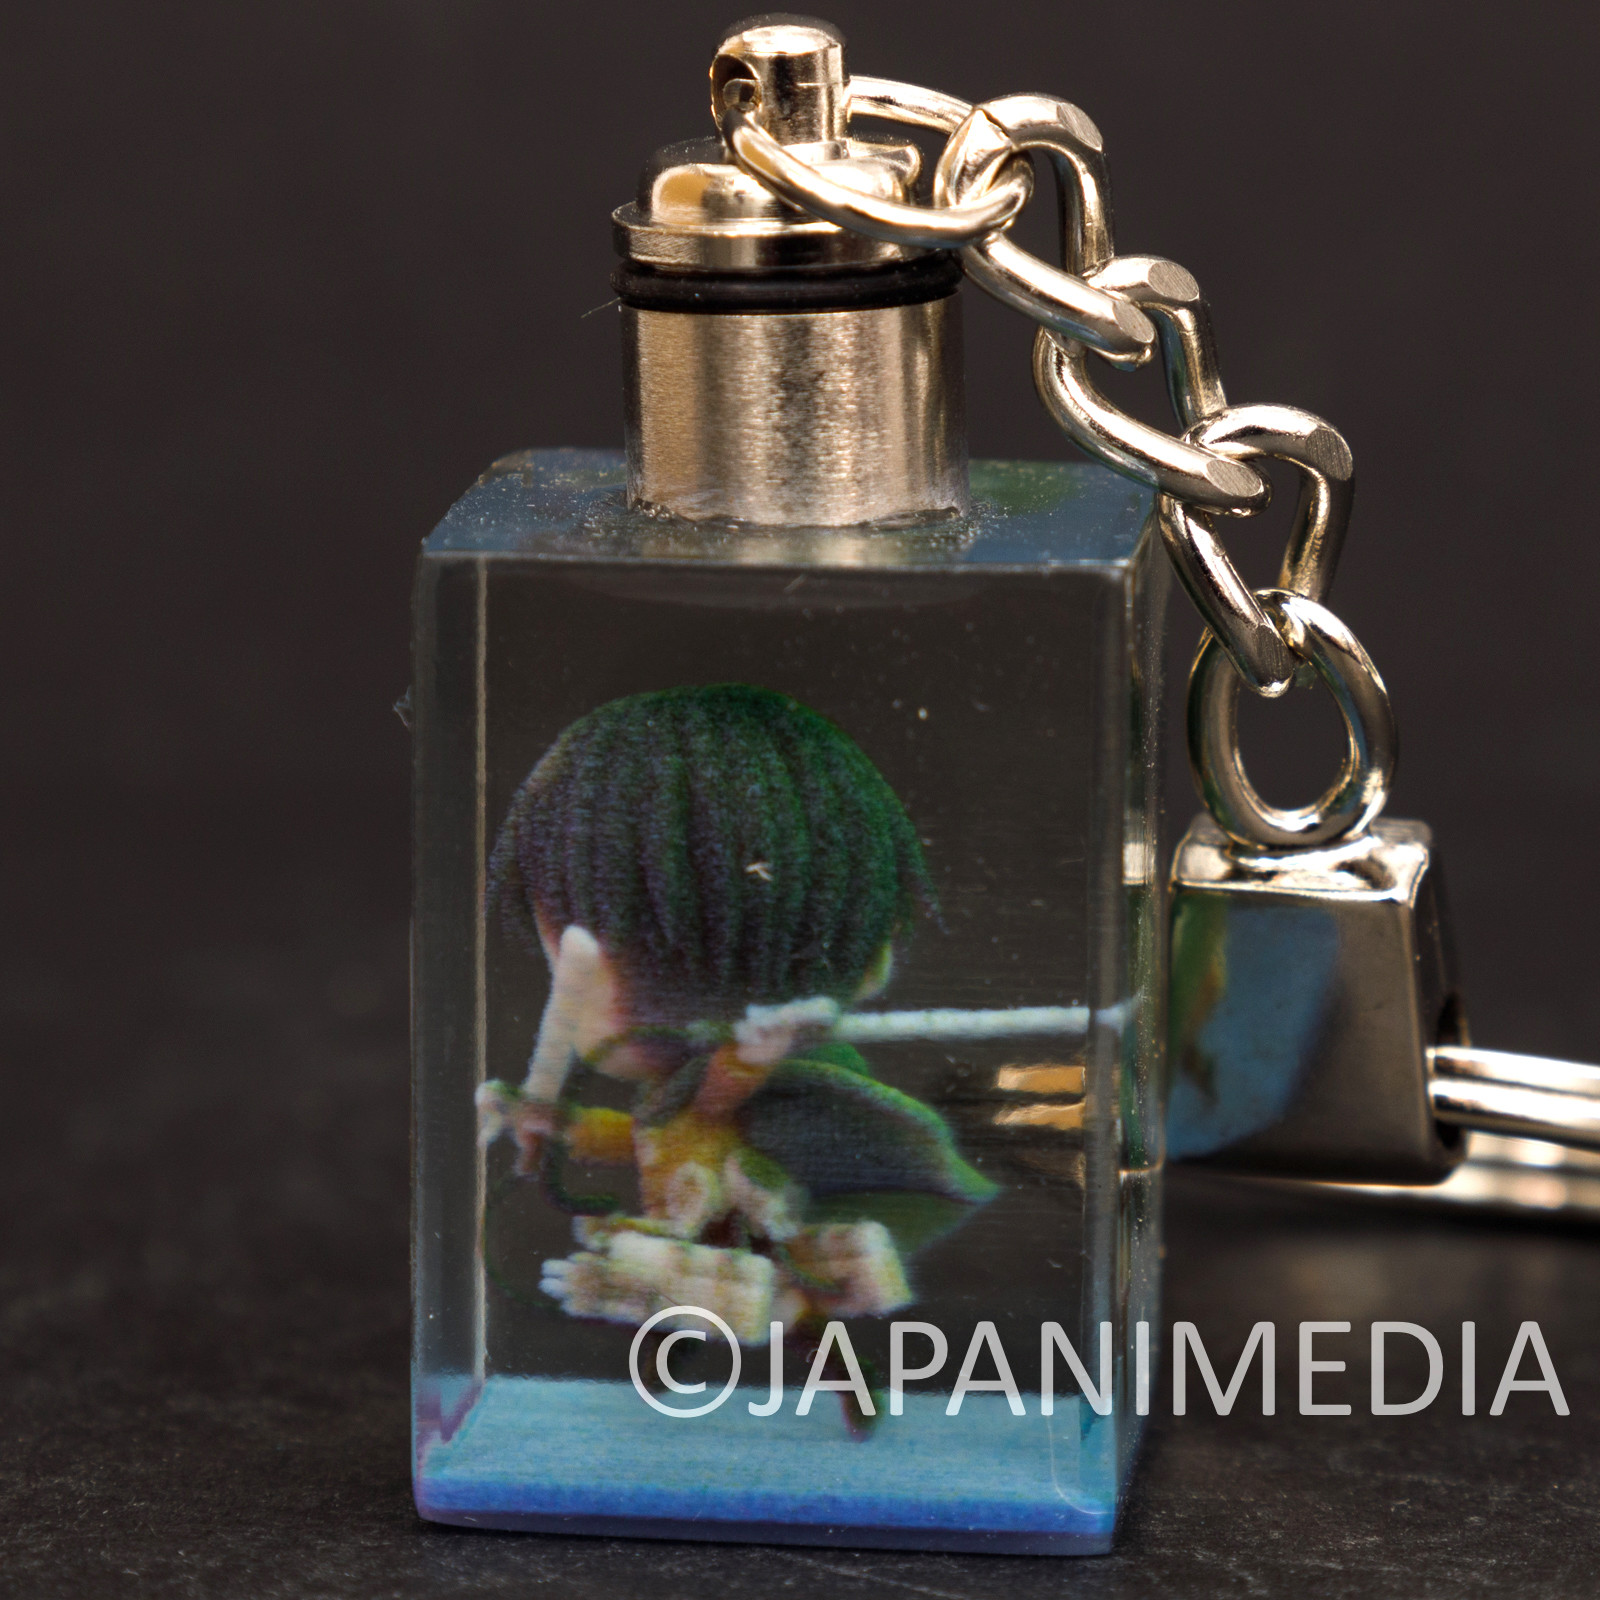 Attack on Titan Levi Ackerman Mini Figure in Light up Cube Keychain JAPAN